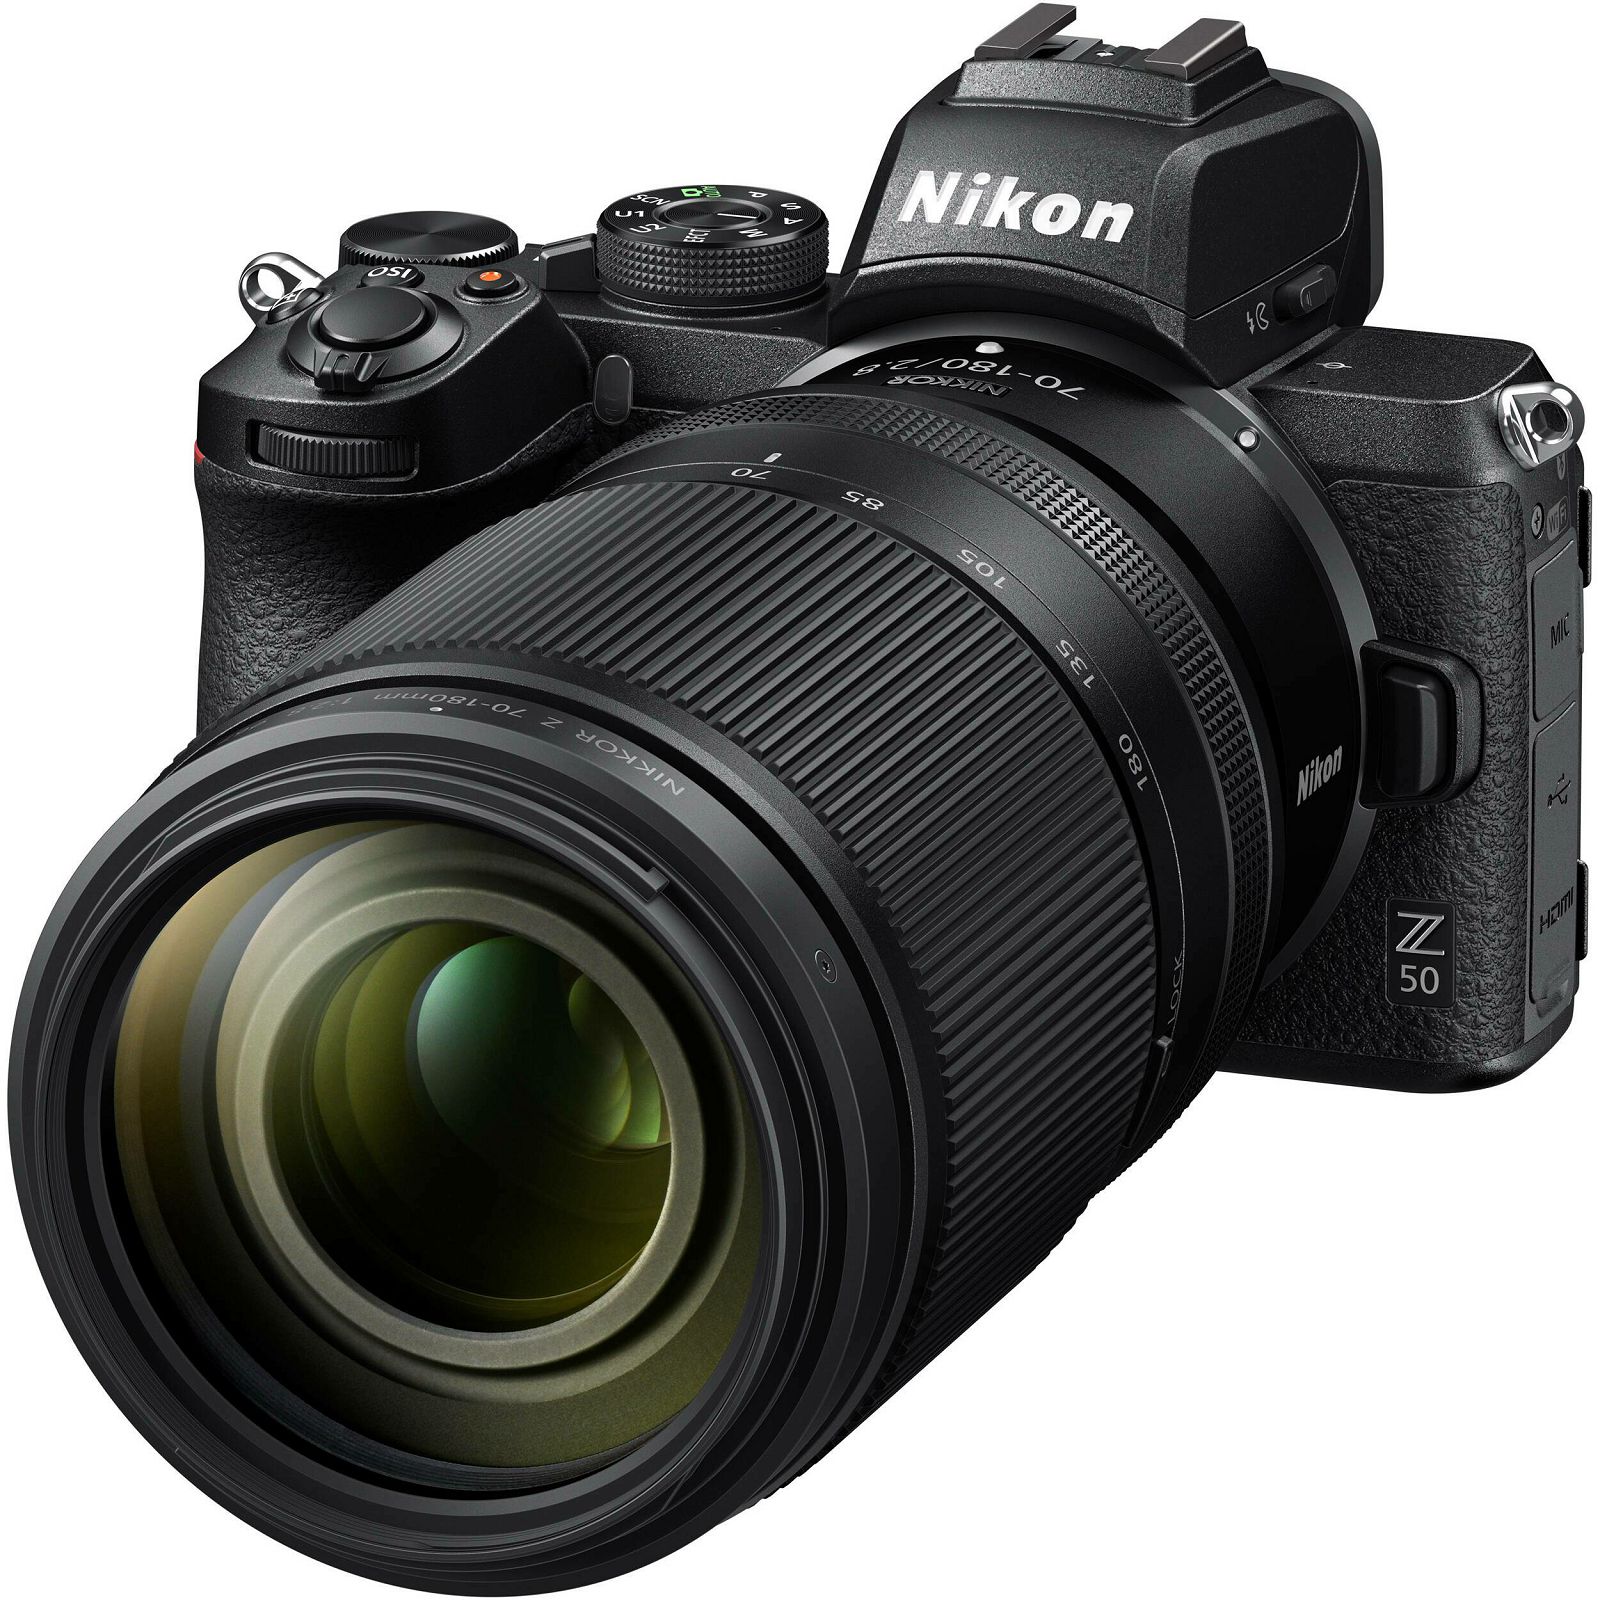 Nikon Z 70-180mm f/2.8 telefoto objektiv (JMA721DA)